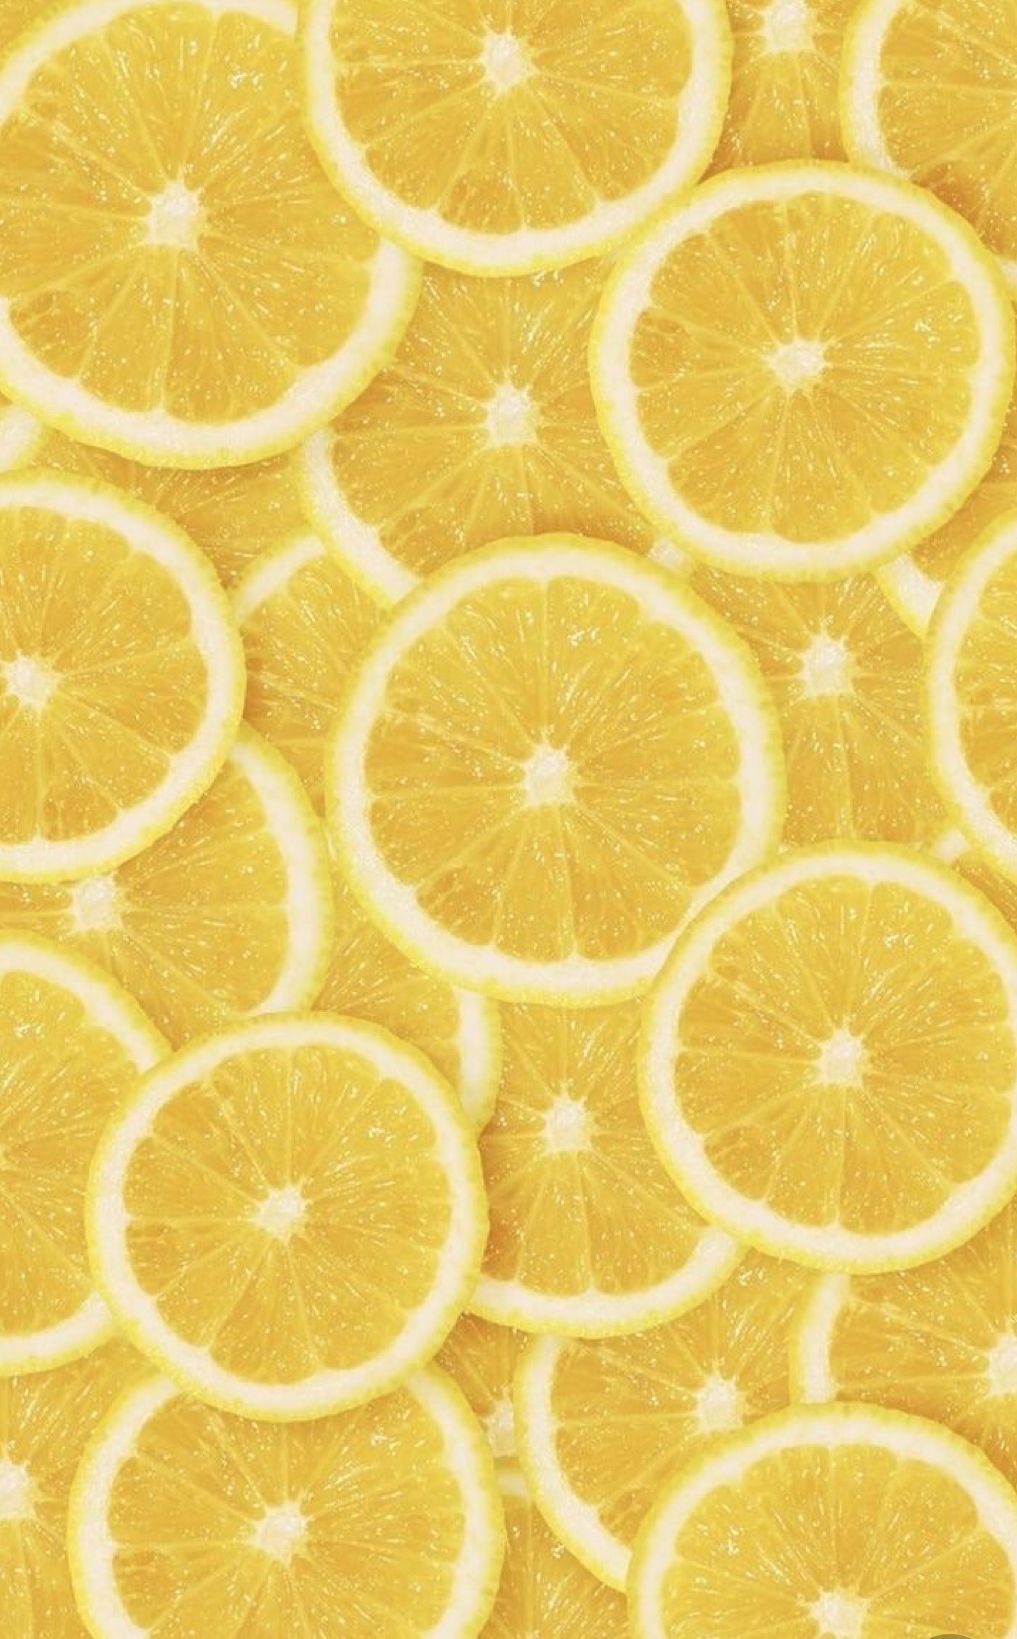 Yellow lemon slices on a yellow background - Lemon